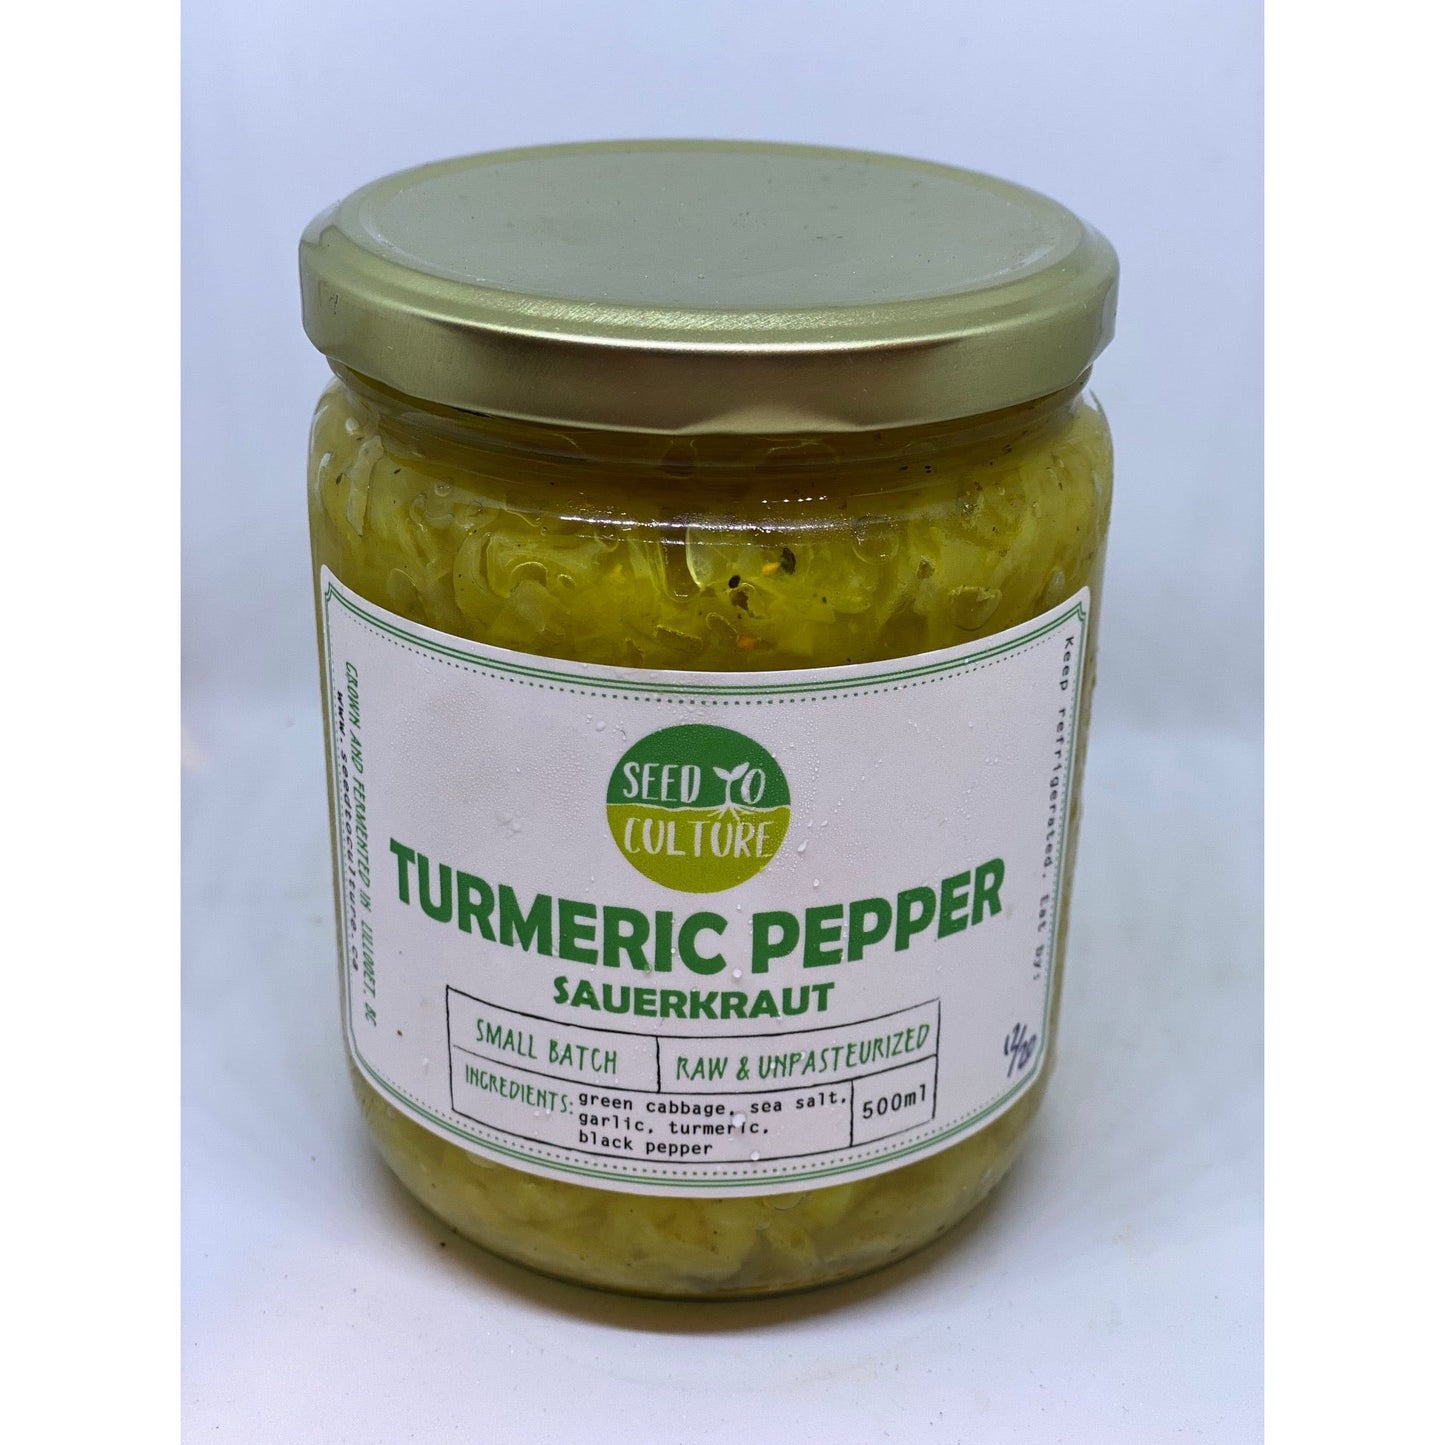 Turmeric Pepper Sauerkraut - Seed to Culture